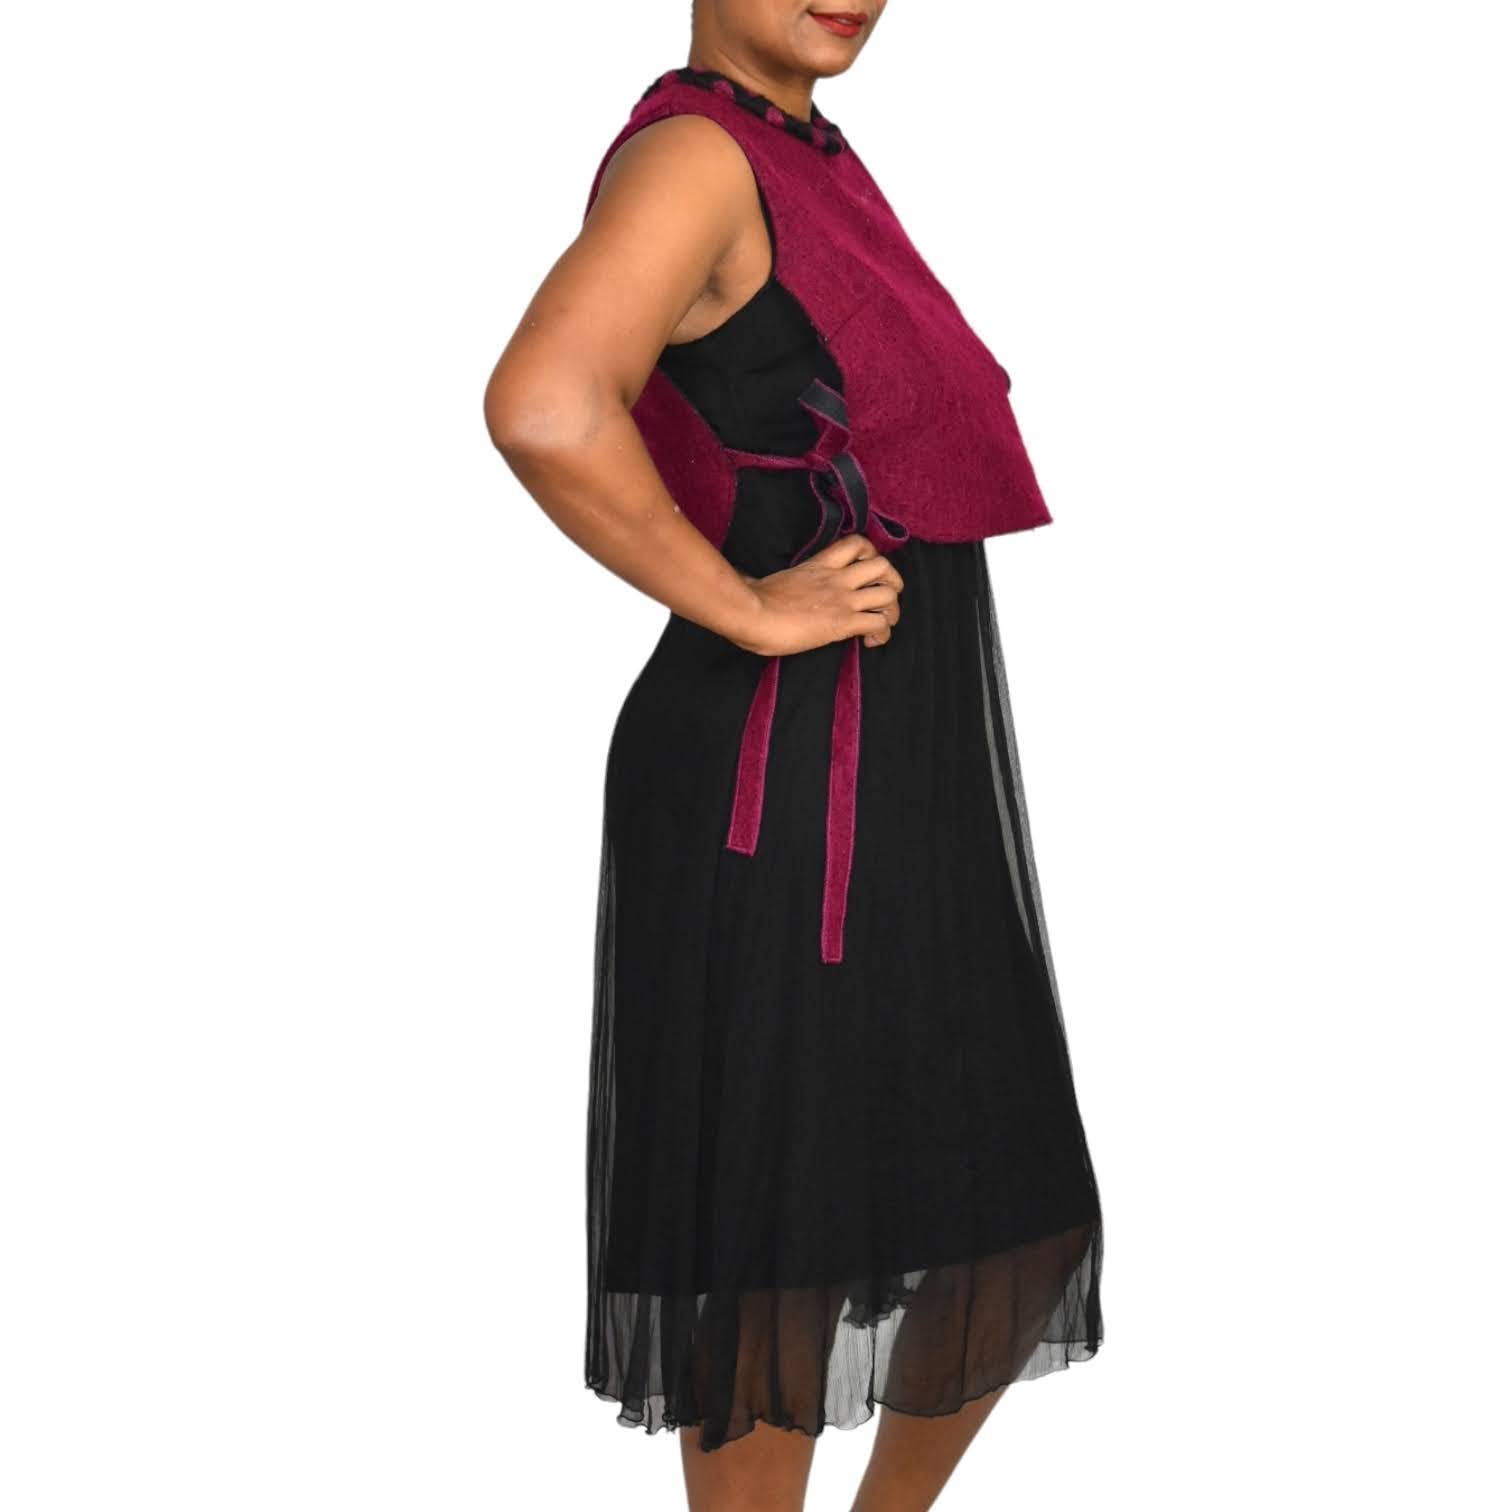 Vest Overlay Midi Dress Red Black Ties Braided Collar Sleeveless Sheer Size Small